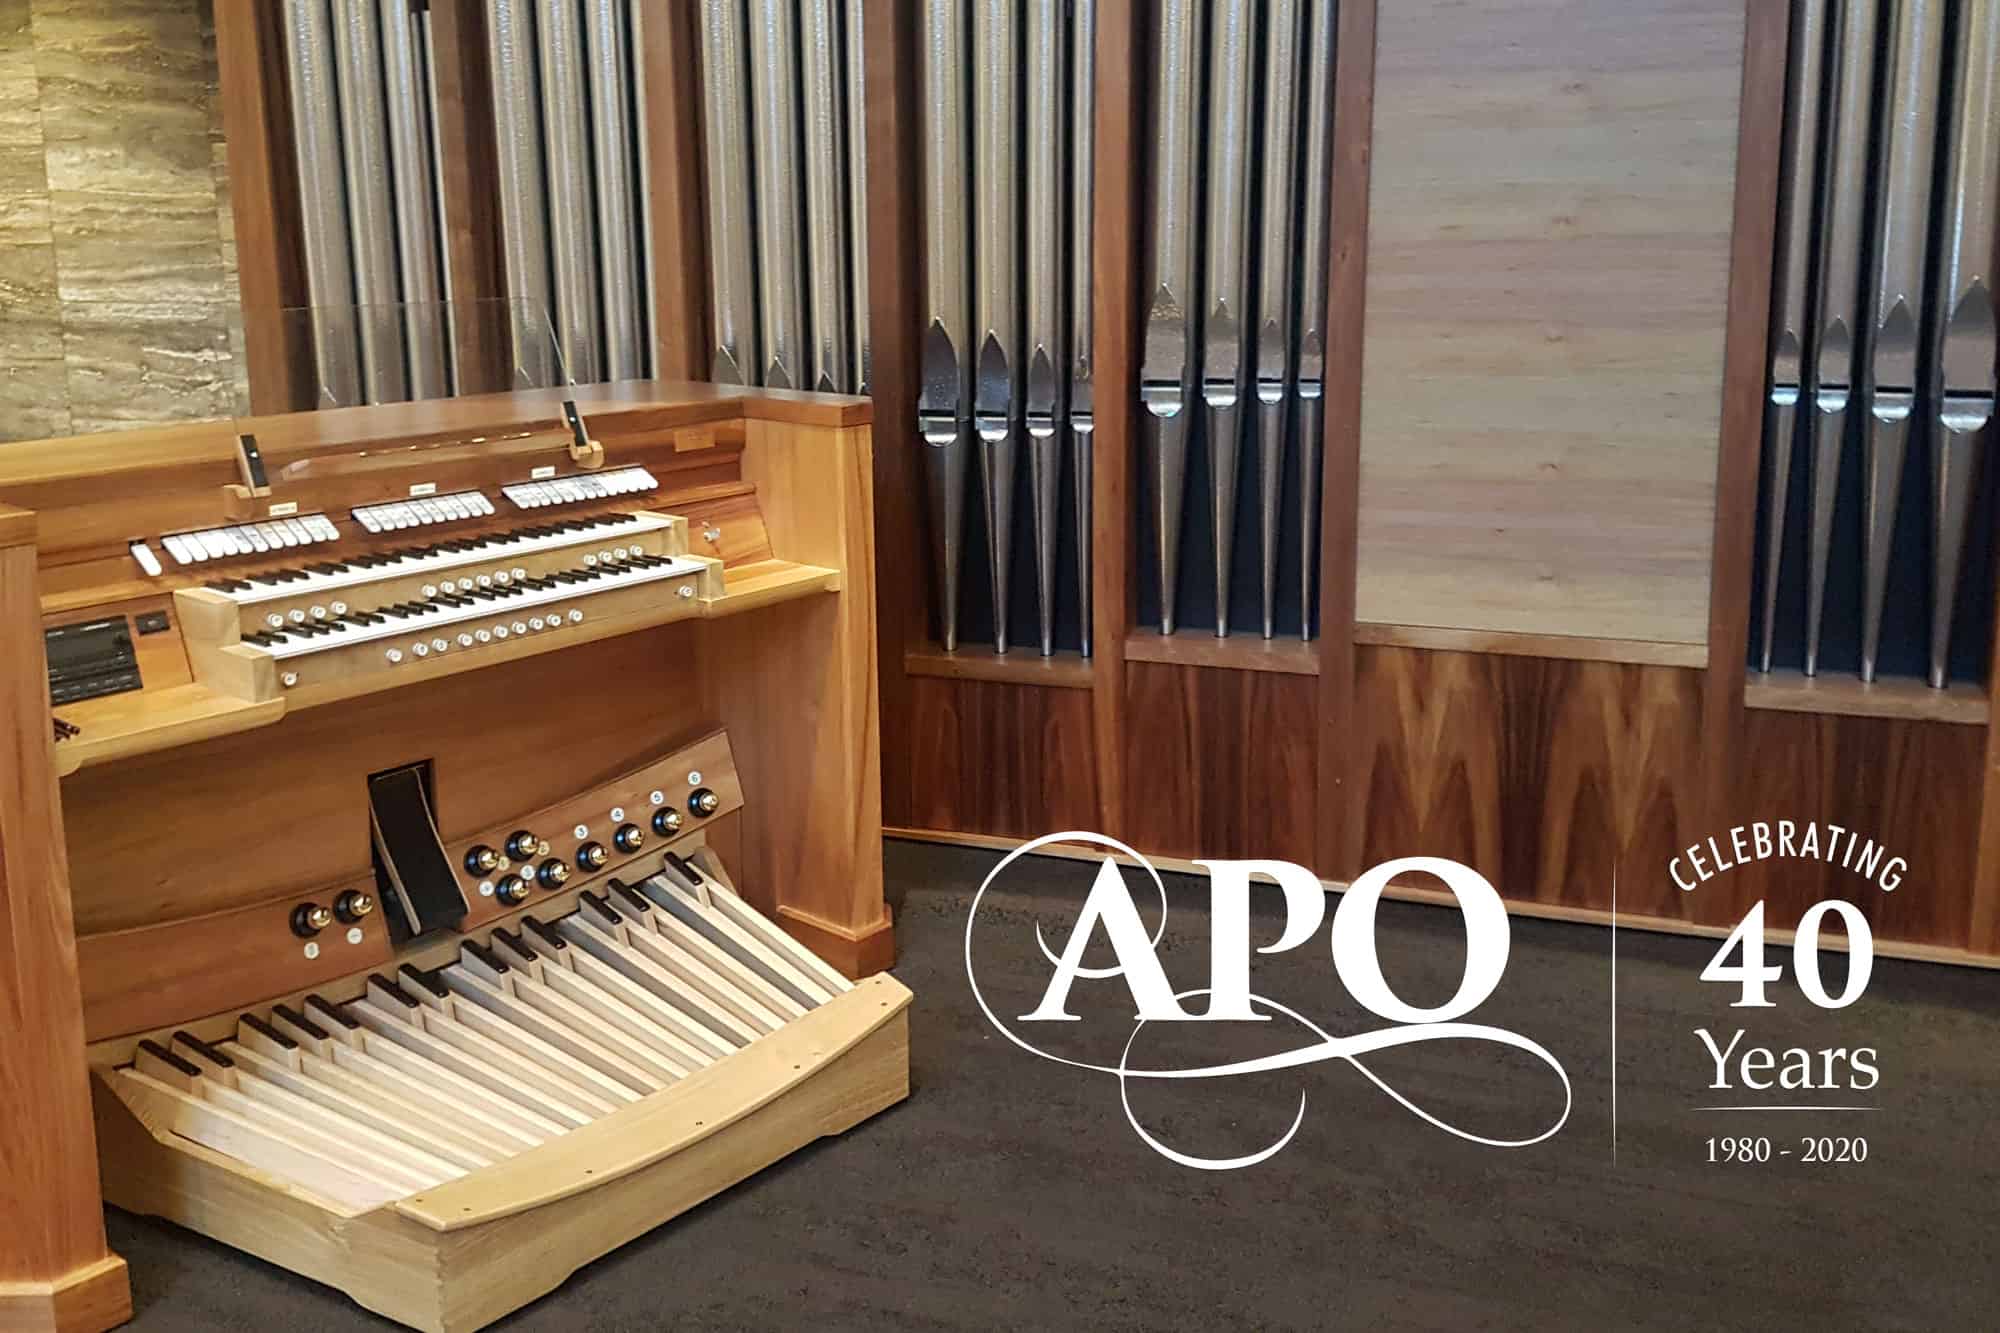 Celebrating 40 years Logo and Image - Australian Pipe Organs (APO)